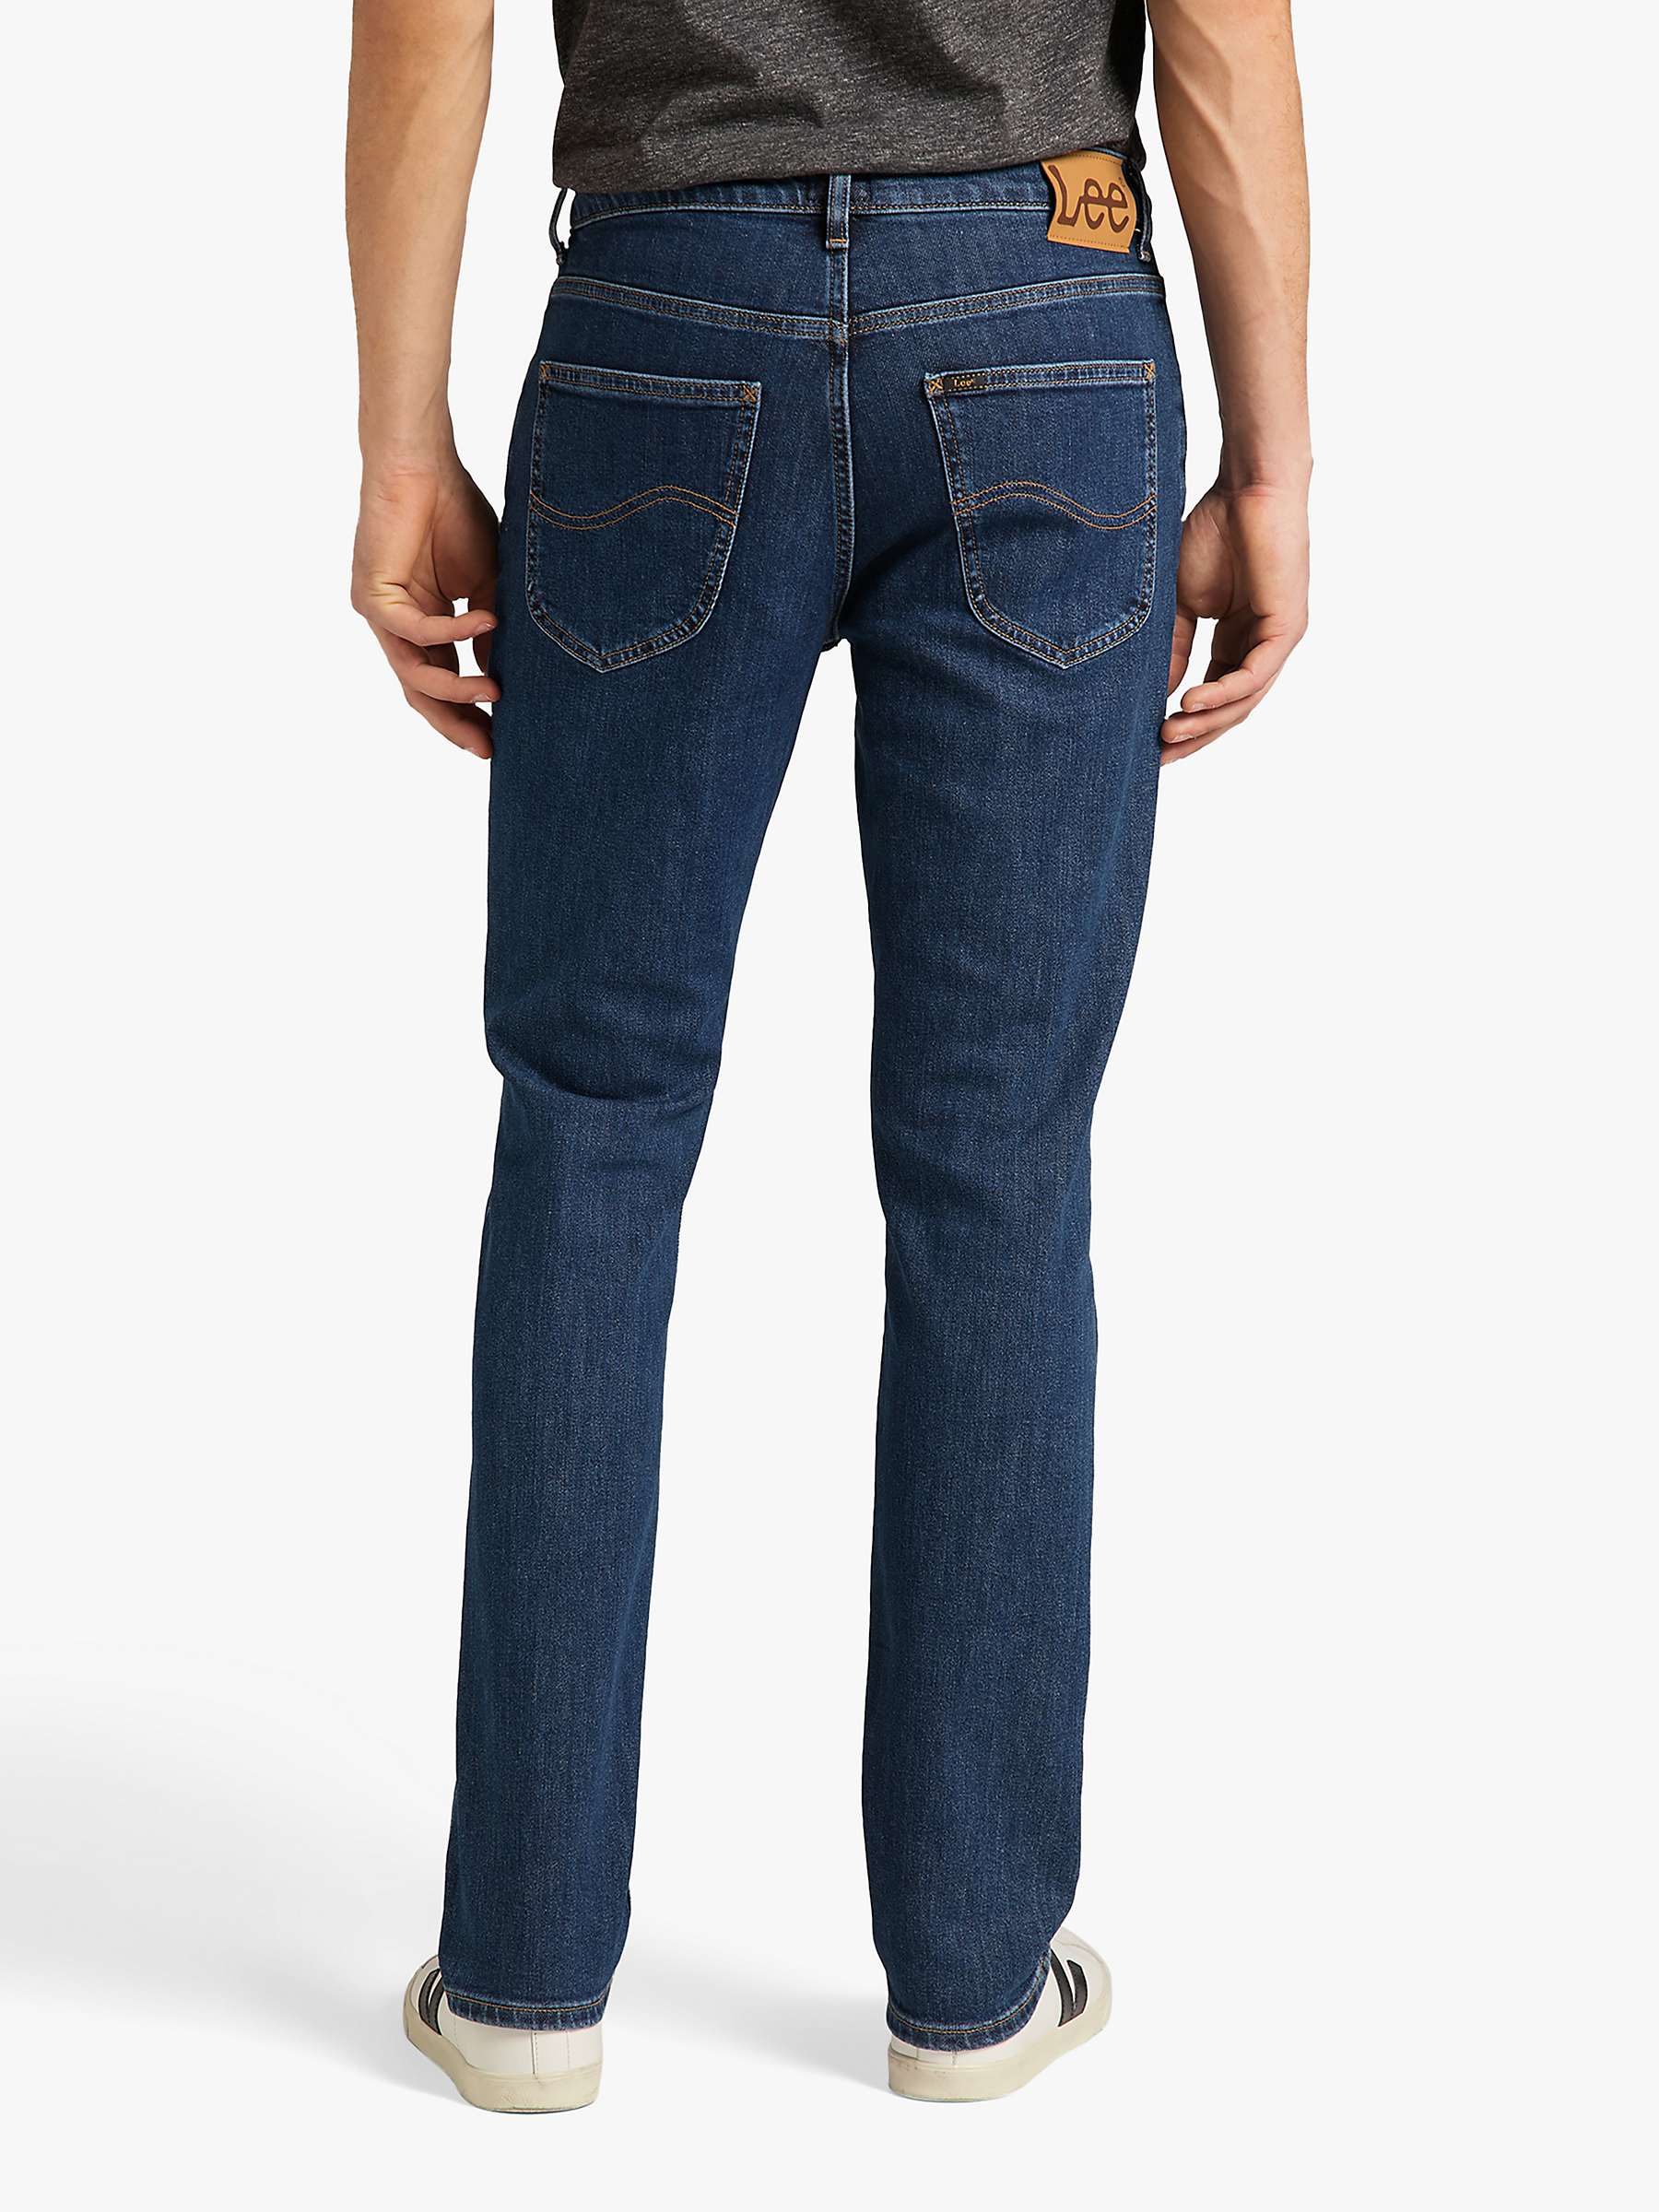 Buy Lee Brooklyn Dark Stone Wash Denim Jeans, Blue Online at johnlewis.com